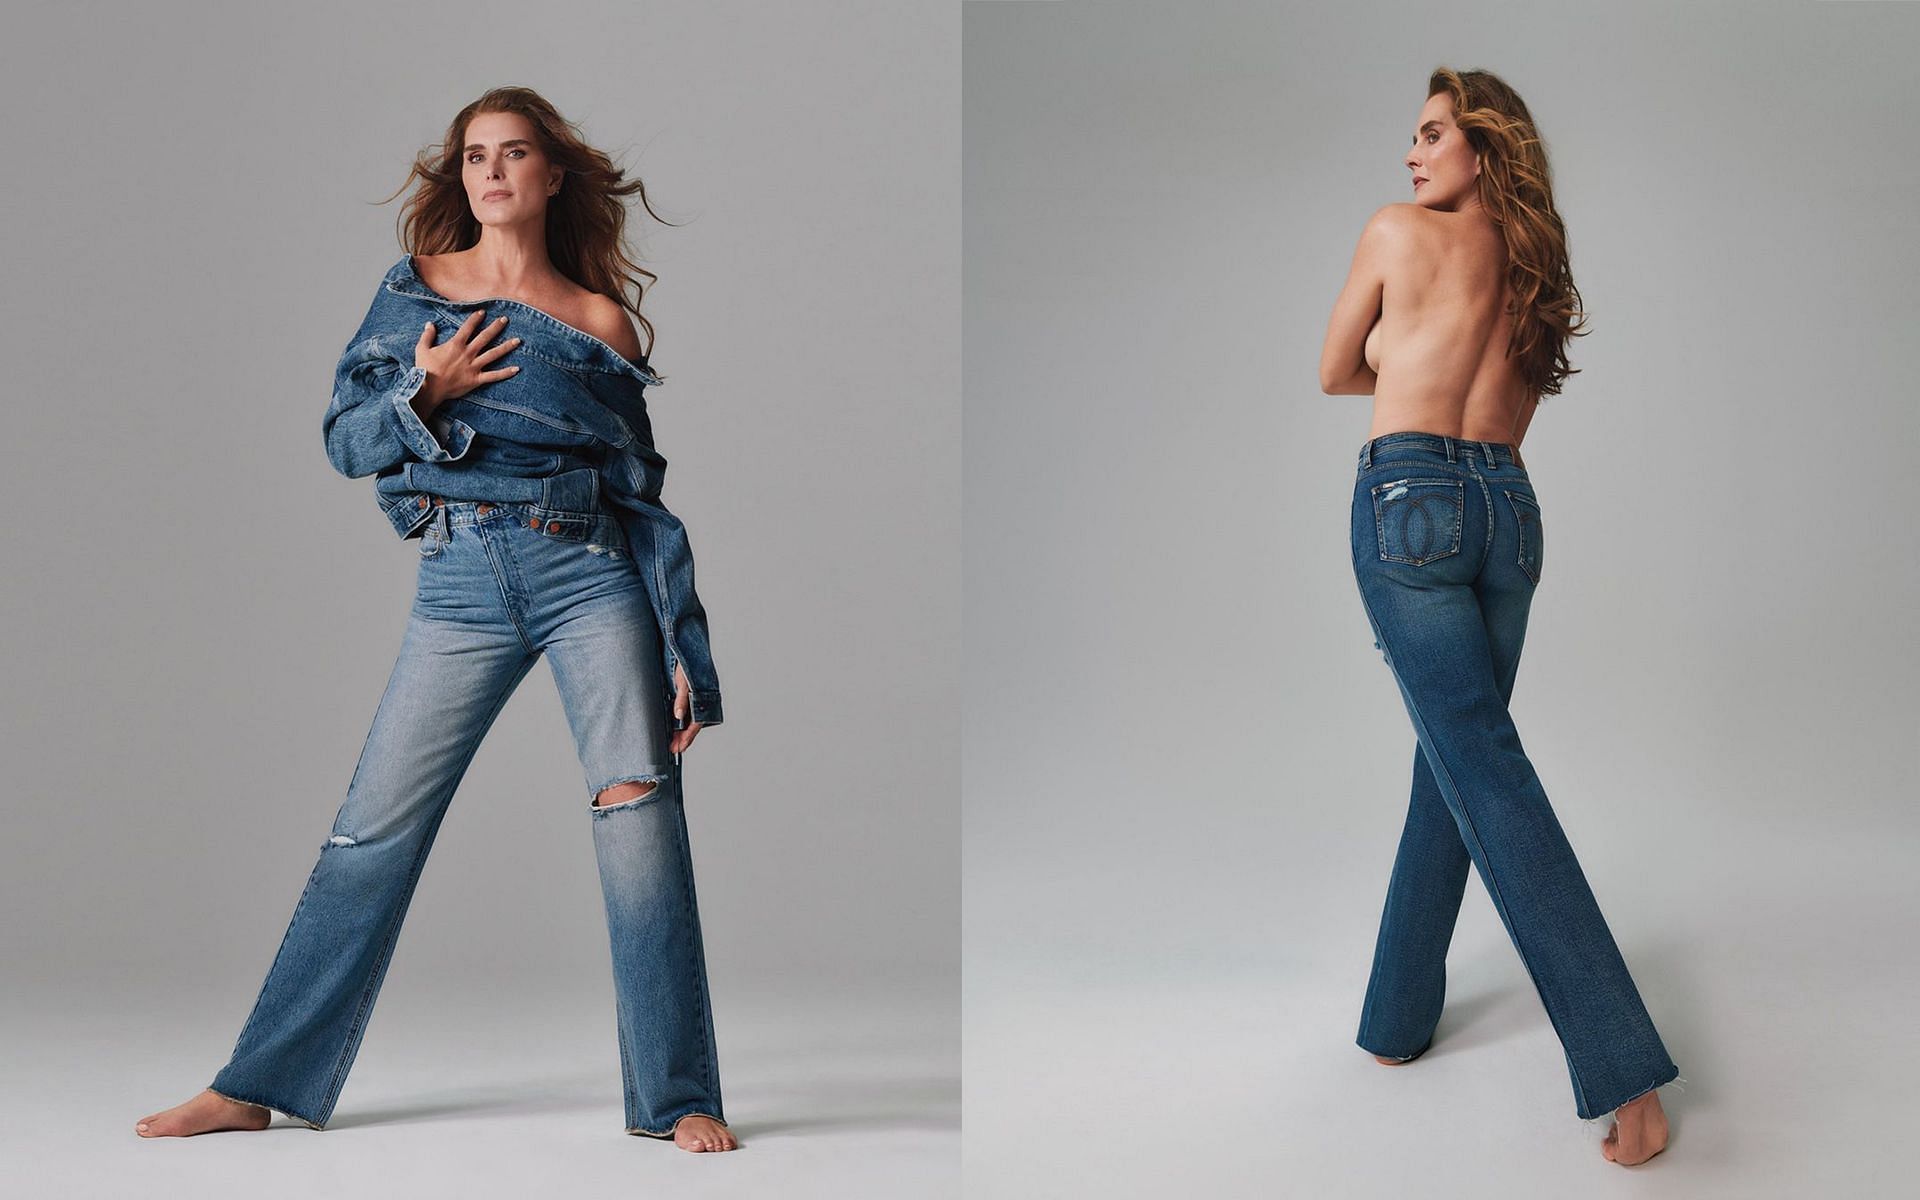 Brooke Shields in a campaign for Jordache Jeans (Image via brookeshield/ Instagram)